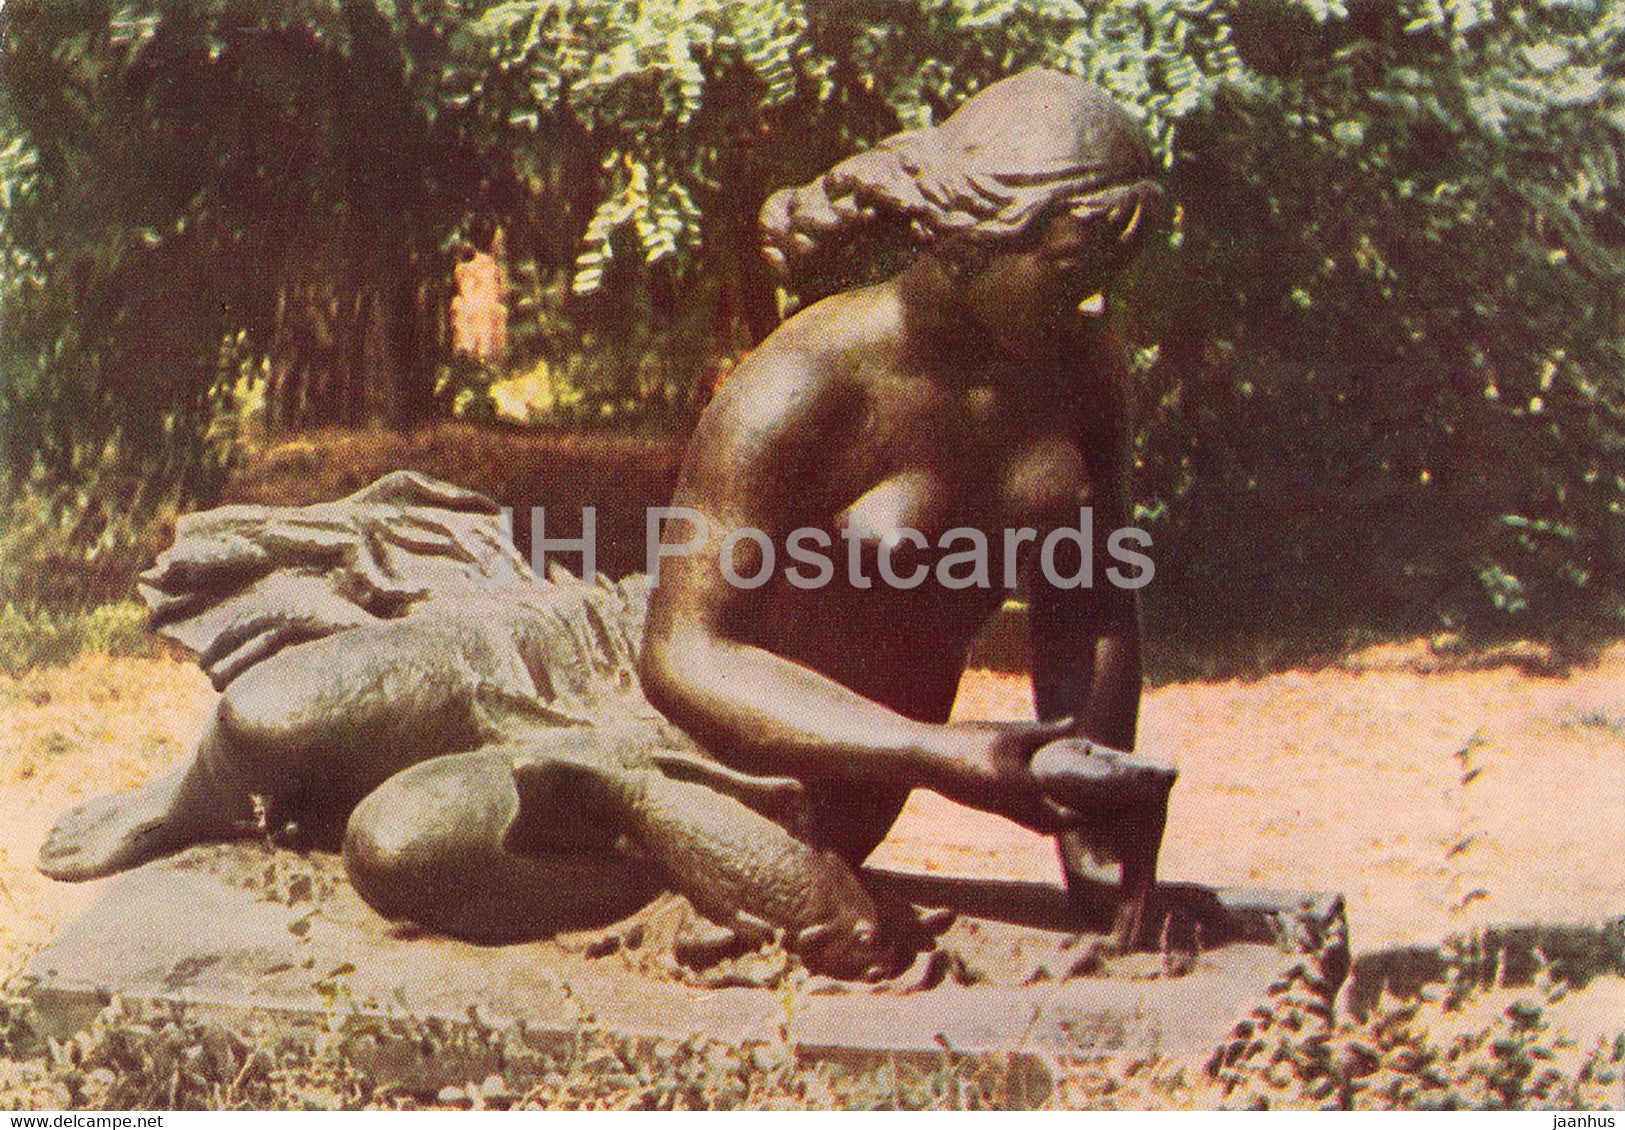 Druskininkai - Ratnycele - sculpture - Lithuania USSR - unused - JH Postcards